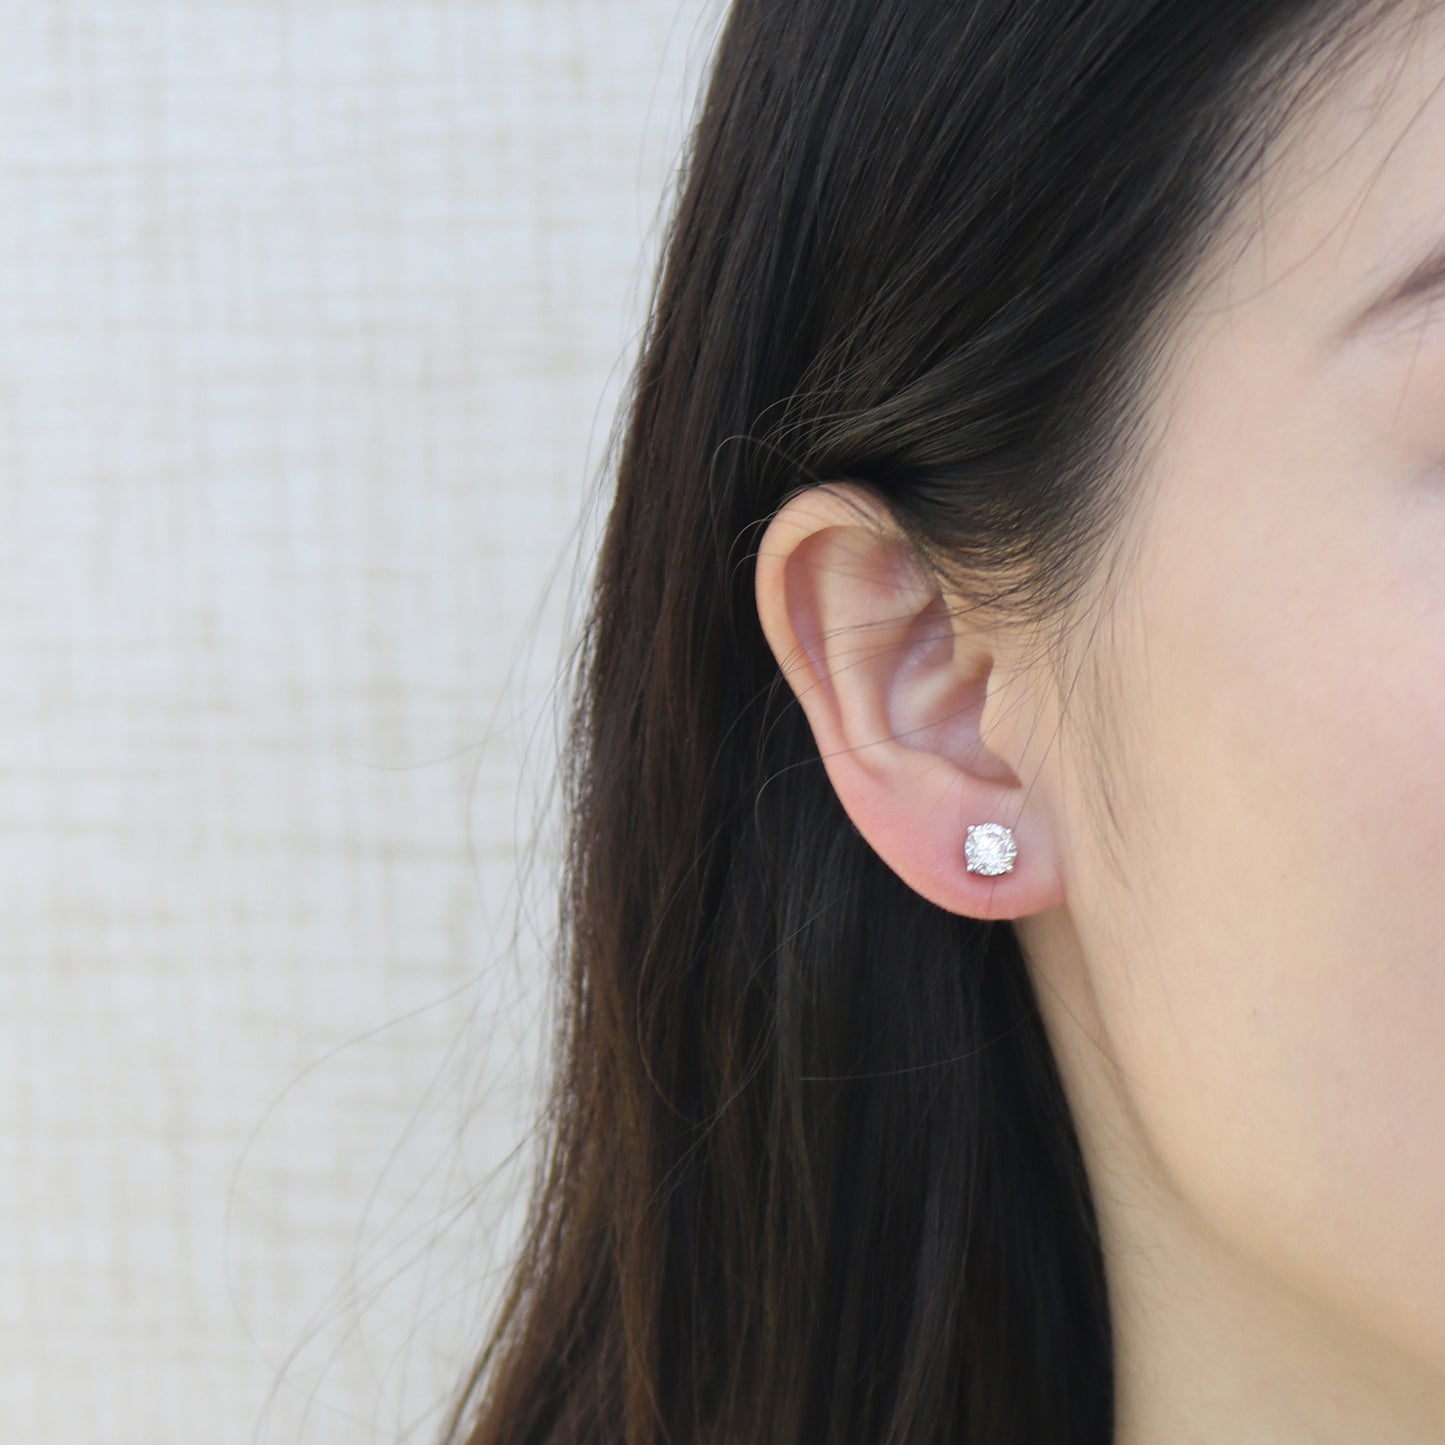 18k白金圓形拼鑽耳環 18k White Gold Illusion Setting Diamond Stud Earrings